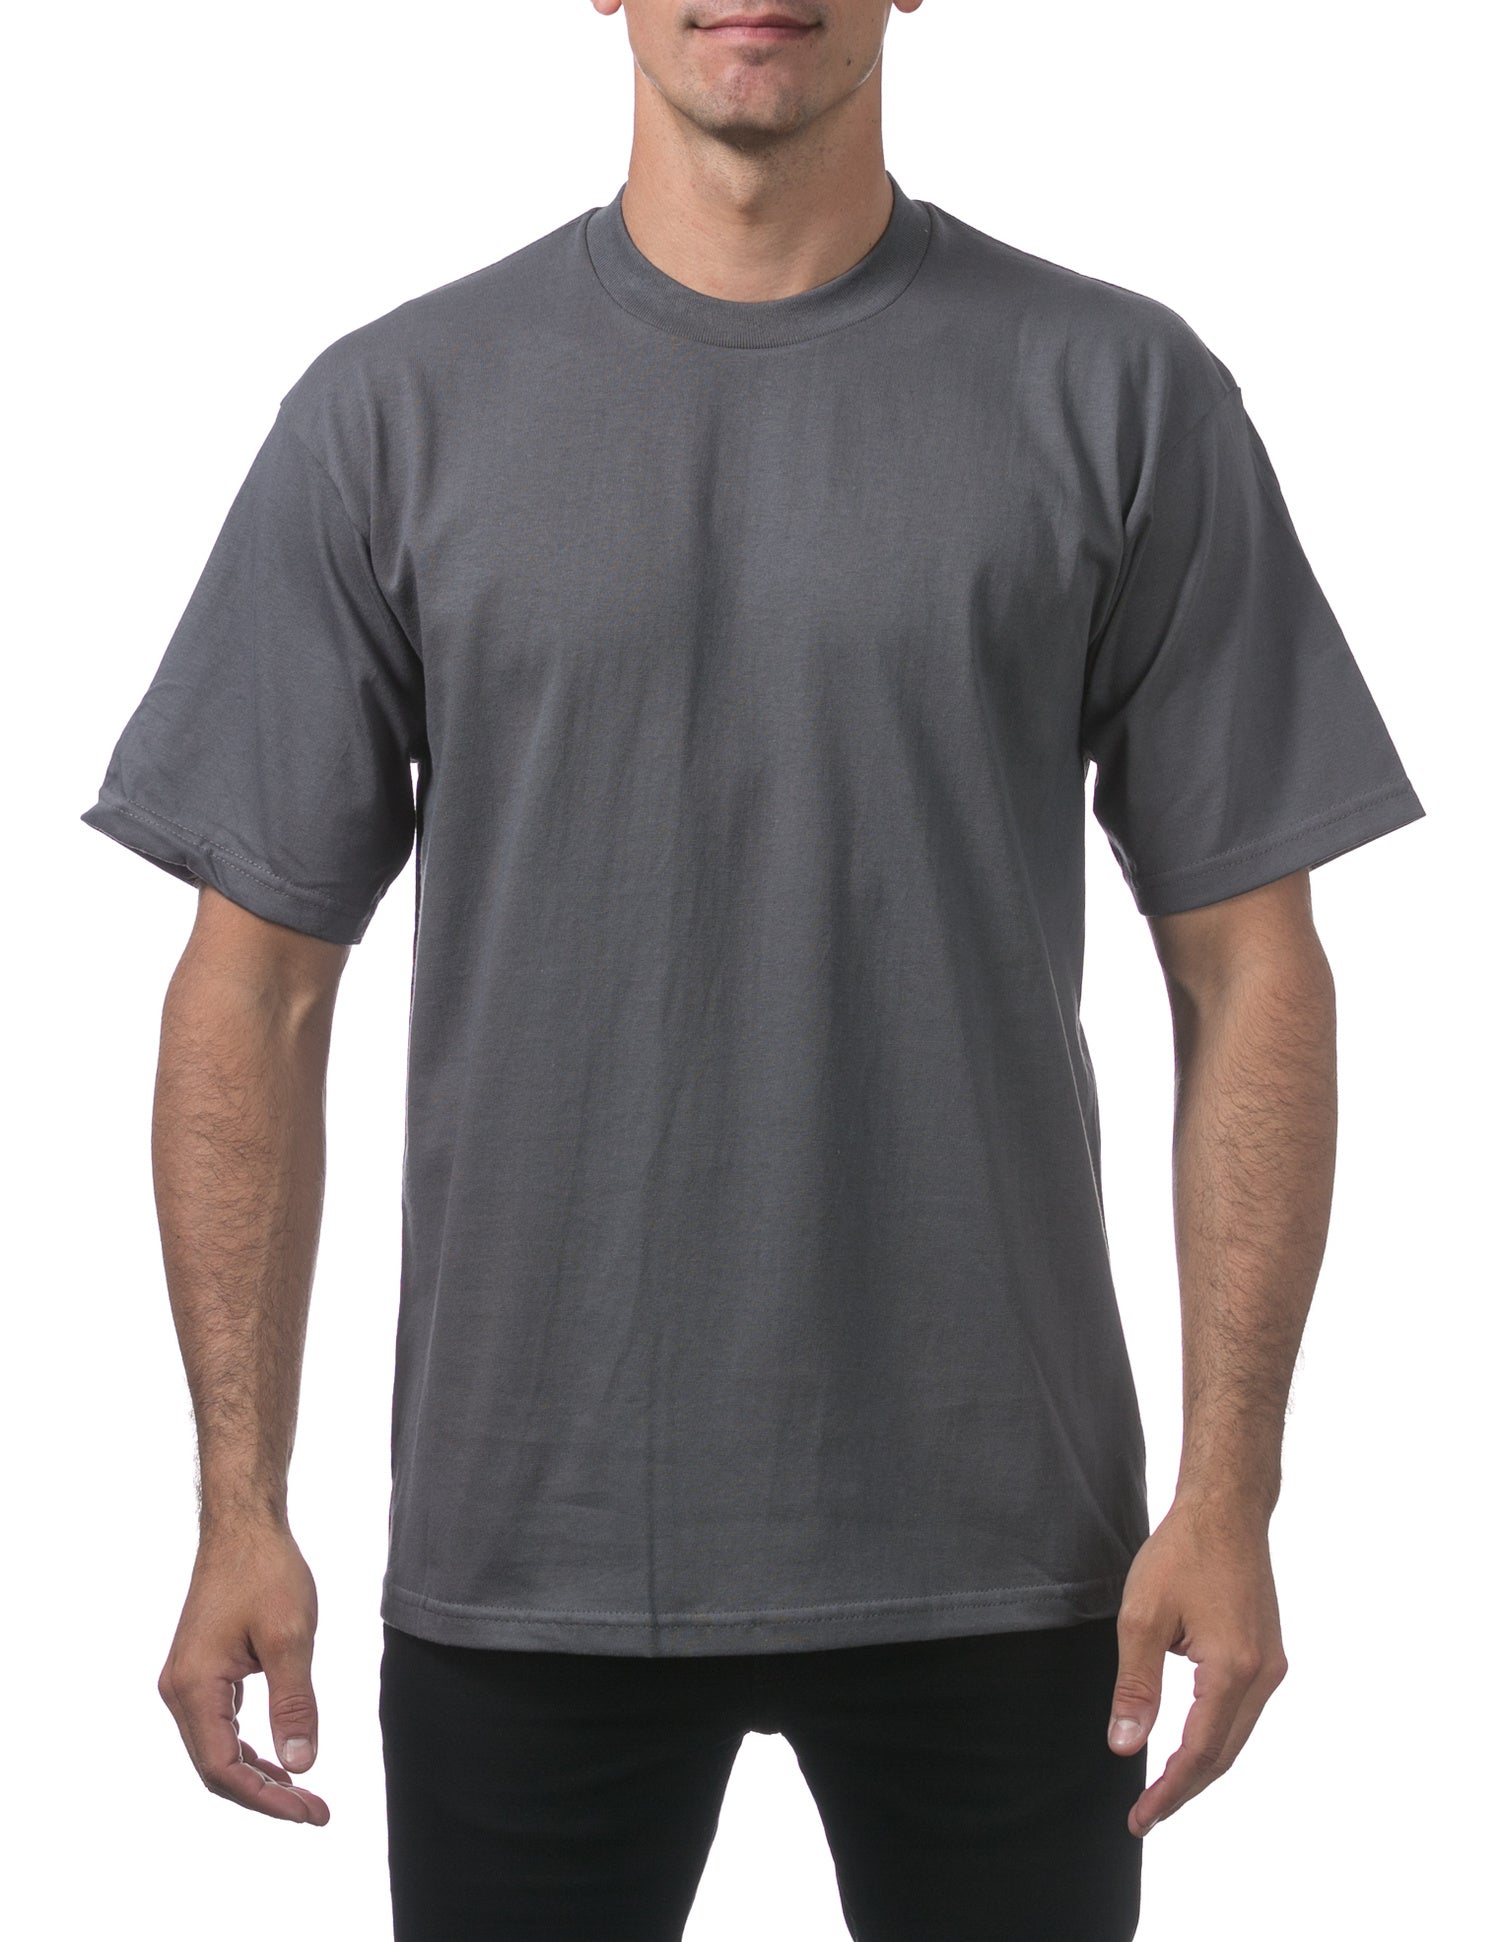 Pro Club Men's Short Sleeve T-Shirt Heavyweight Cotton